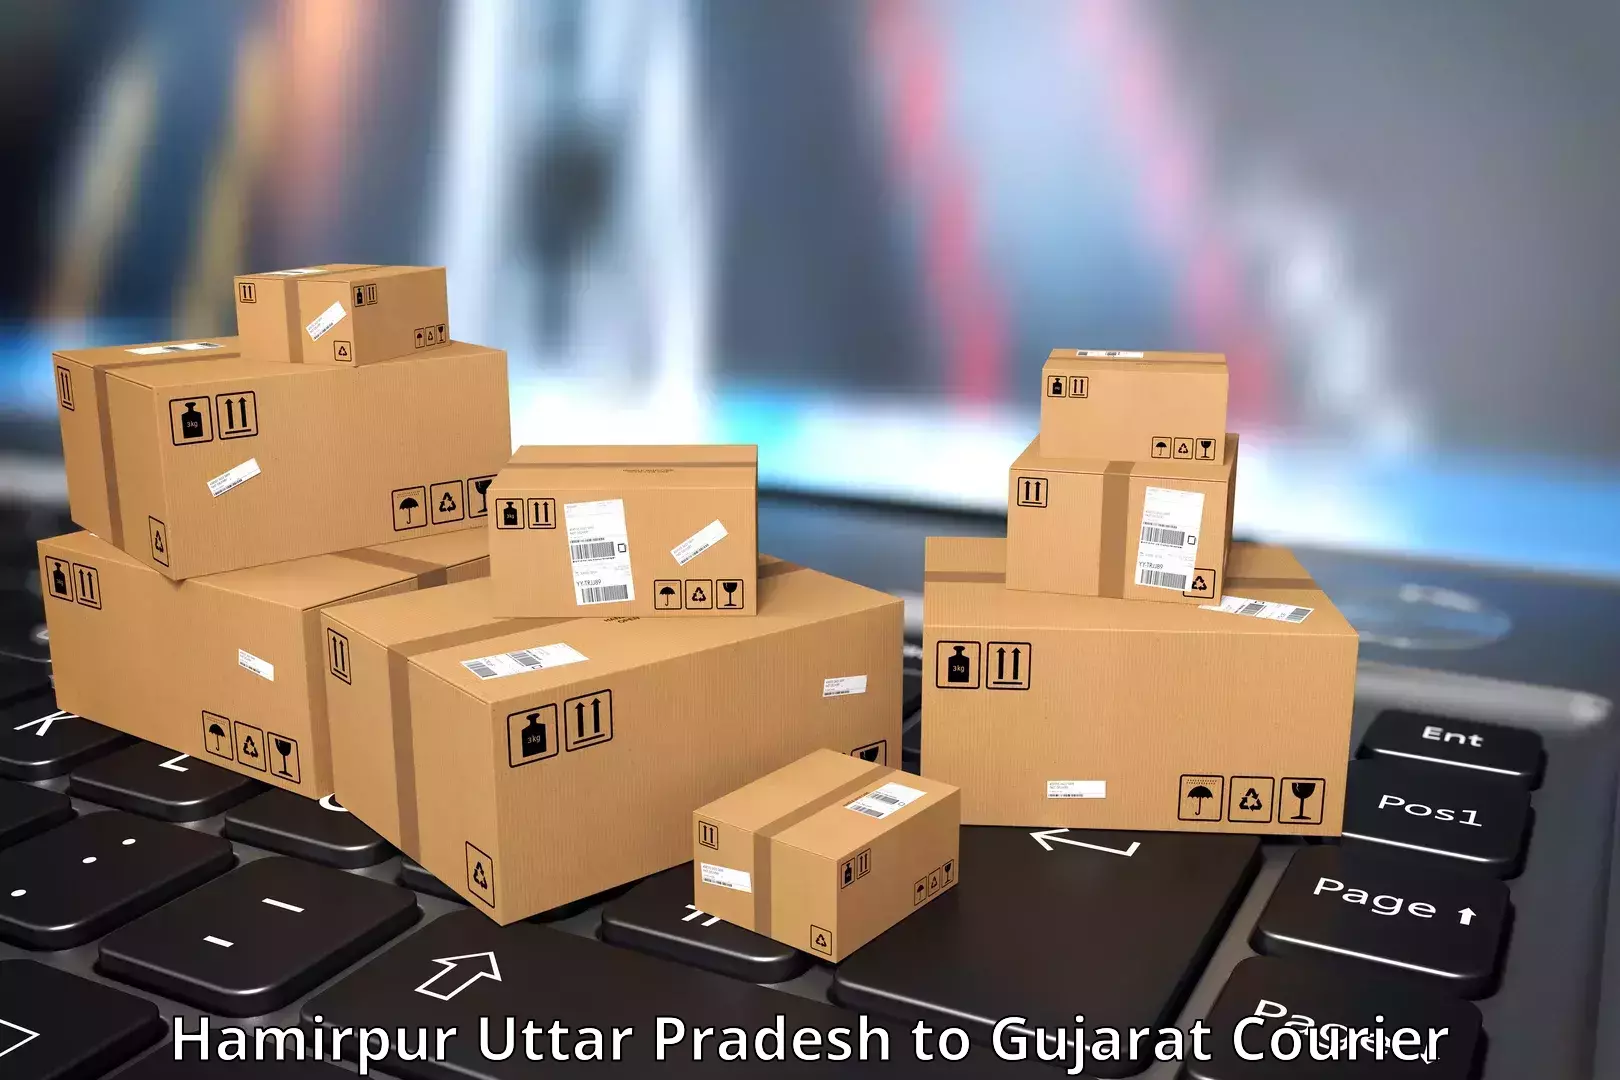 State-of-the-art courier technology Hamirpur Uttar Pradesh to Gujarat